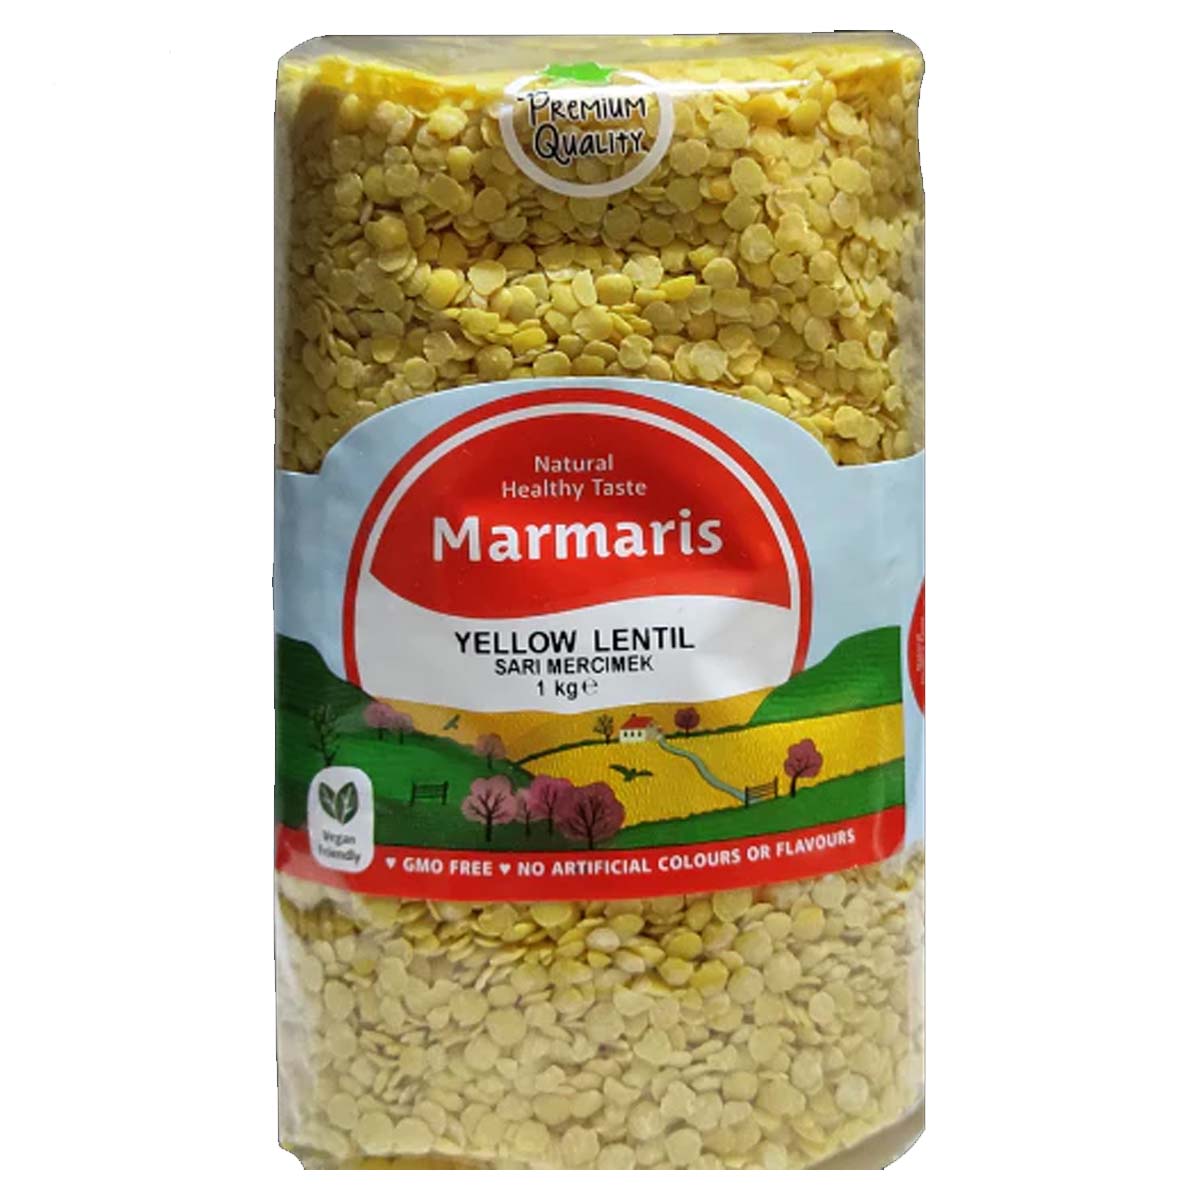 Marmaris - Yellow Lentils Split - 1kg - Continental Food Store